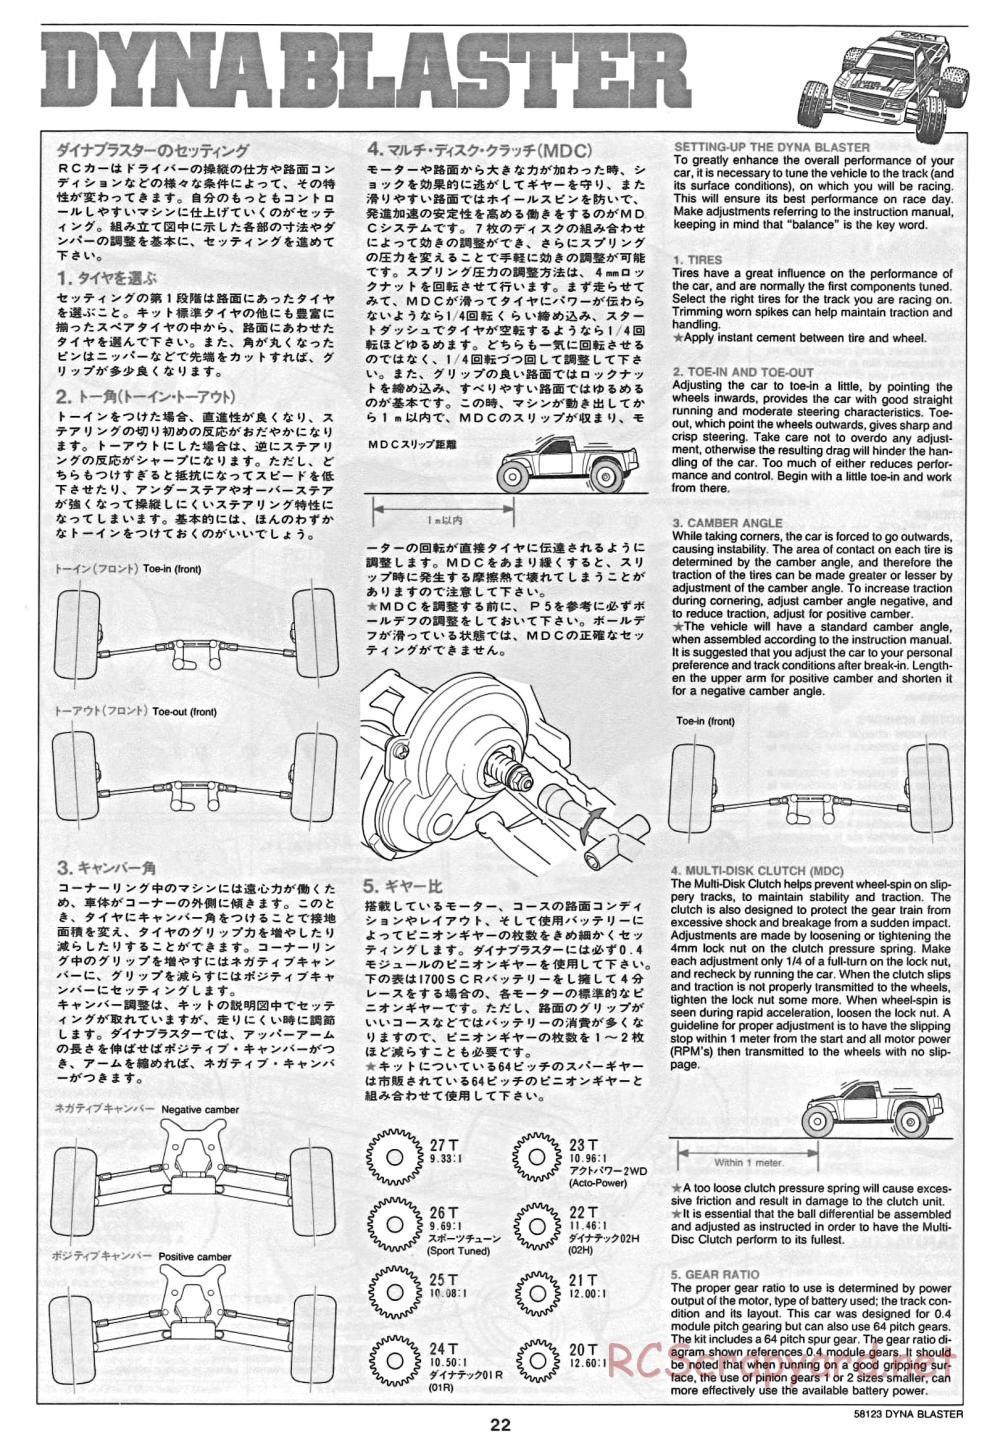 Tamiya - Dyna Blaster Chassis - Manual - Page 22